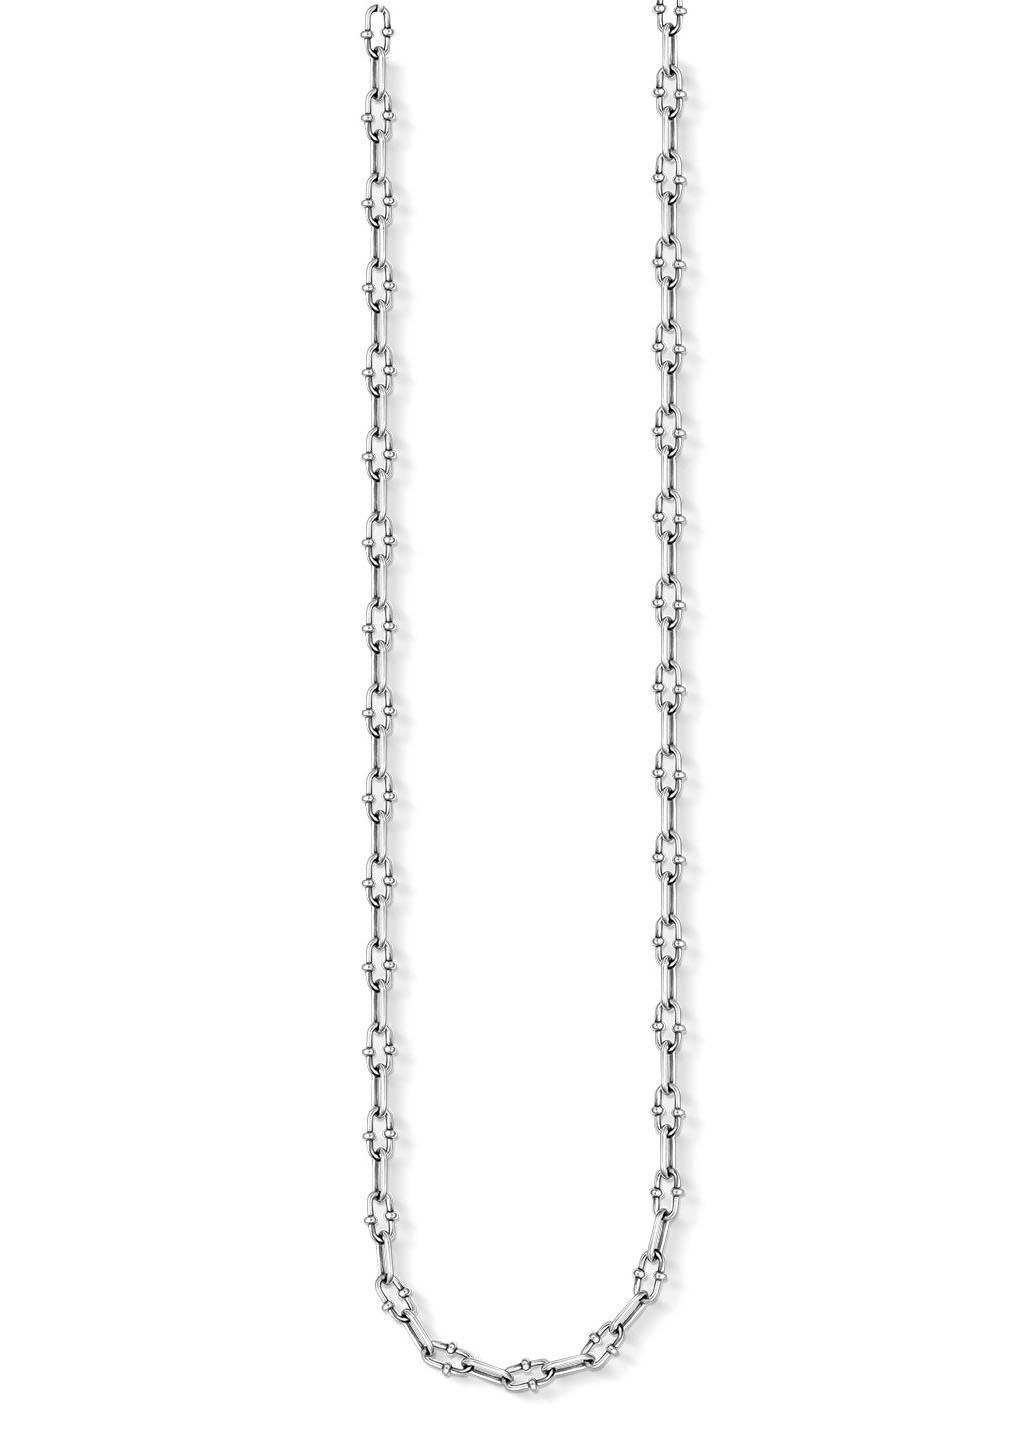 Thomas Sabo Damen-Charm Halskette 925 Sterling Silber 38-45 cm Länge